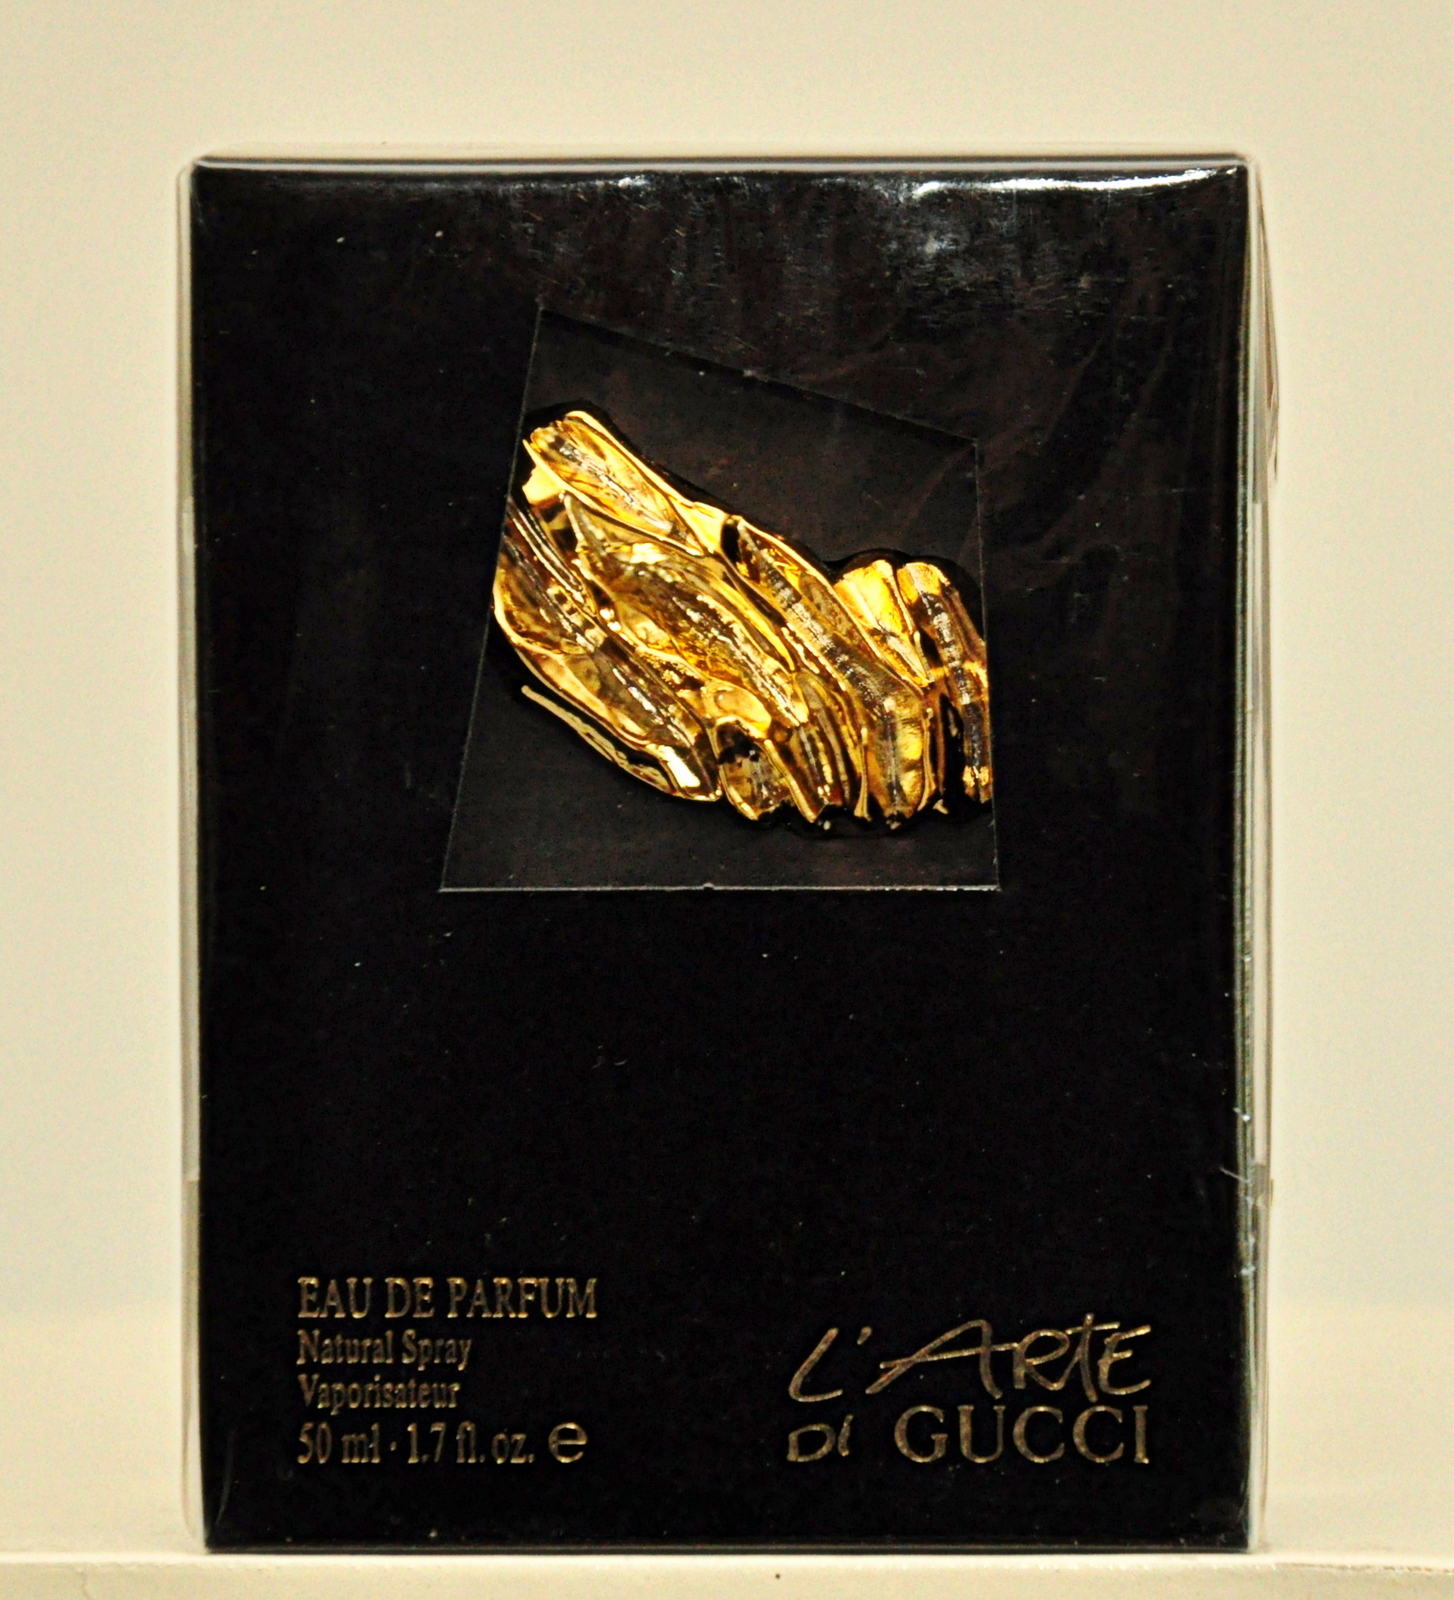 Primary image for Gucci L'Arte di Gucci Eau de Parfum Edp 50ml 1.7 Fl. Oz. Spray Vintage Old 1991